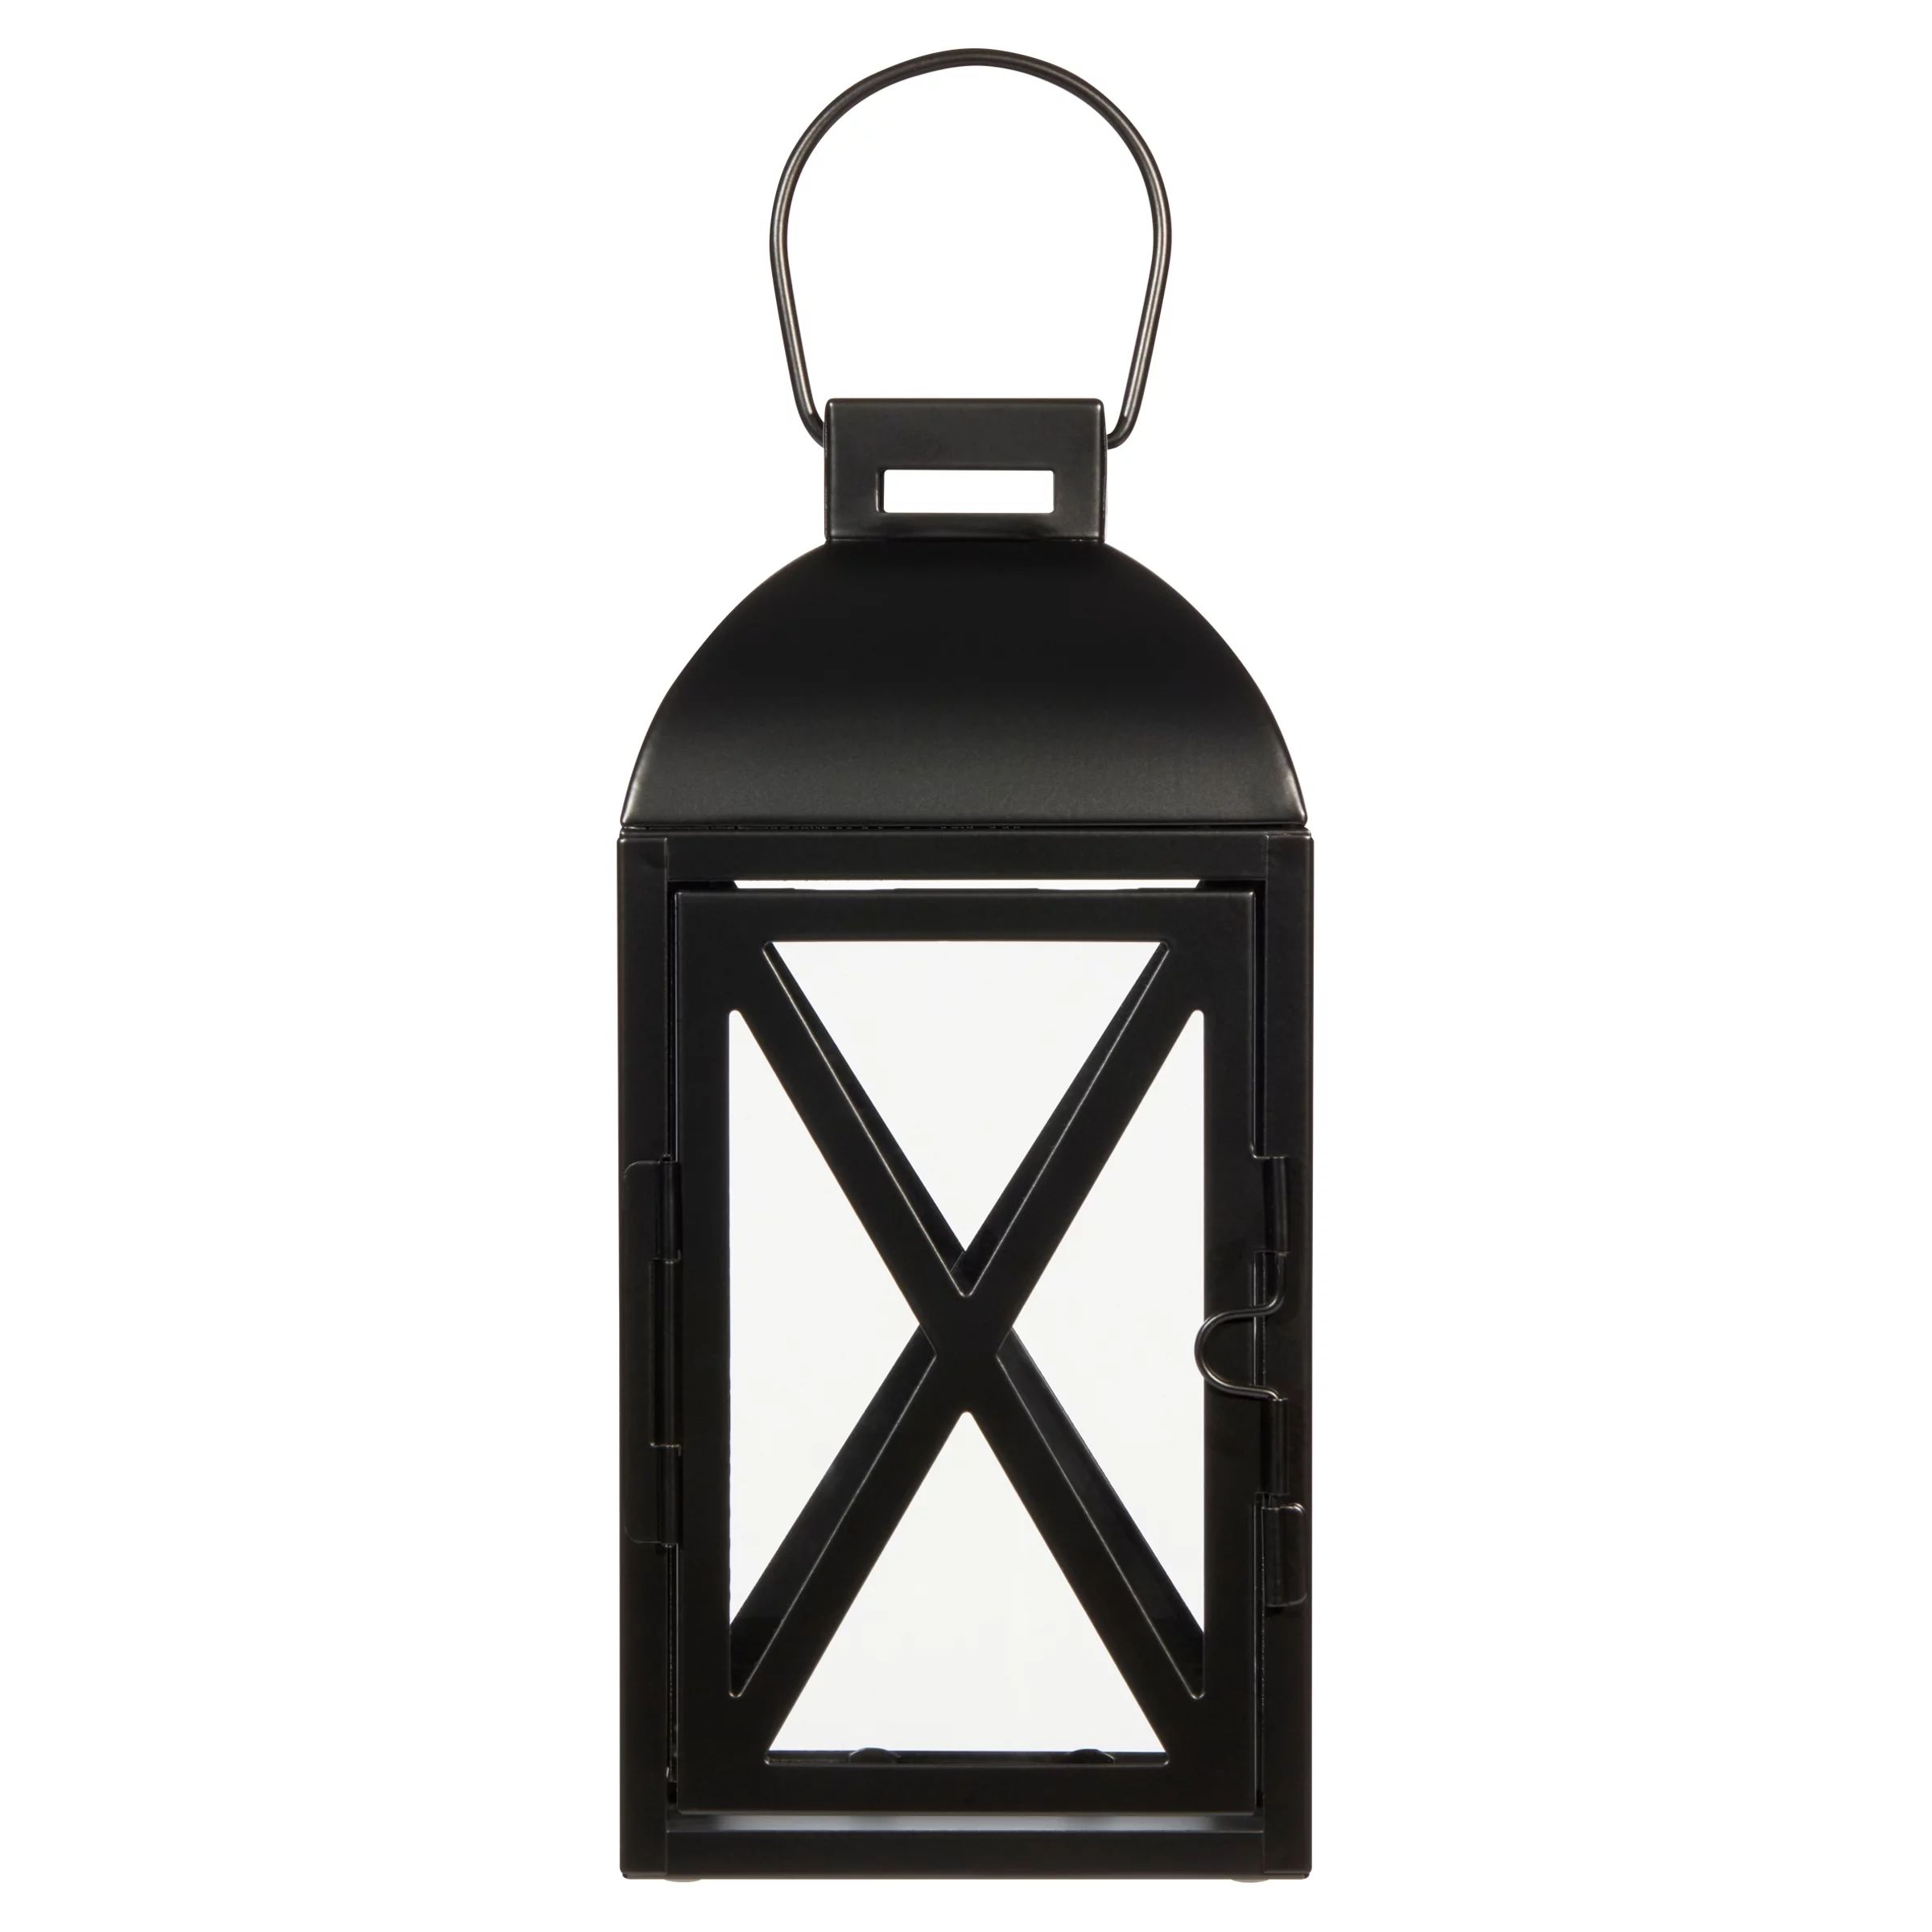 Mainstays Small Black Metal Candle Holder Lantern, Home Decoration | Walmart (US)